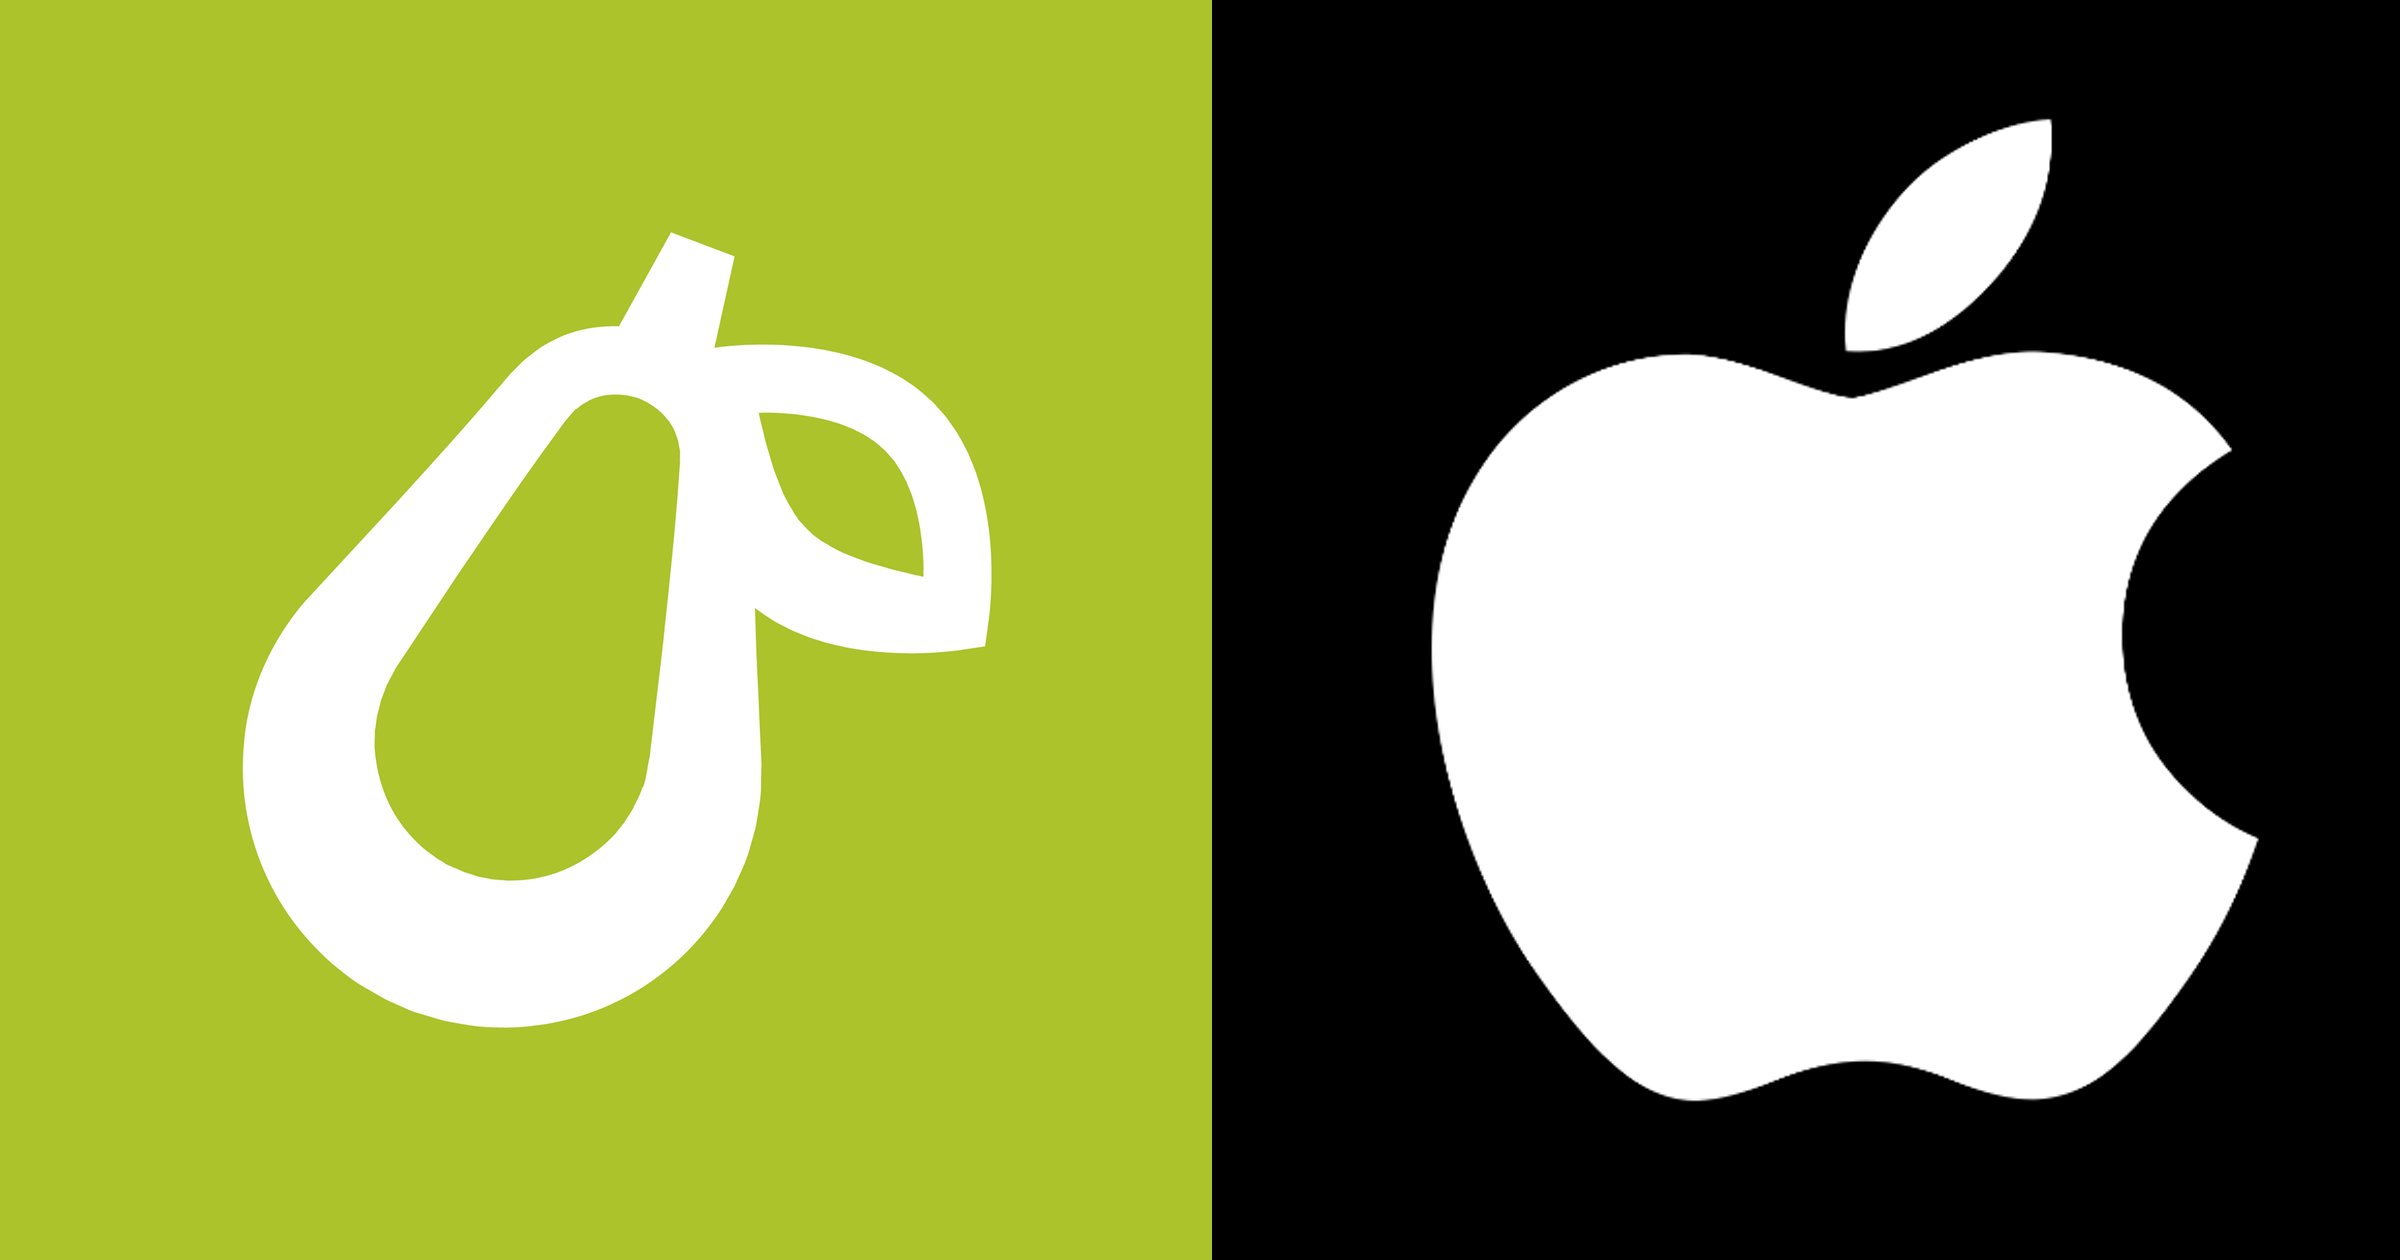 Prepear Pear logo and Apple logo